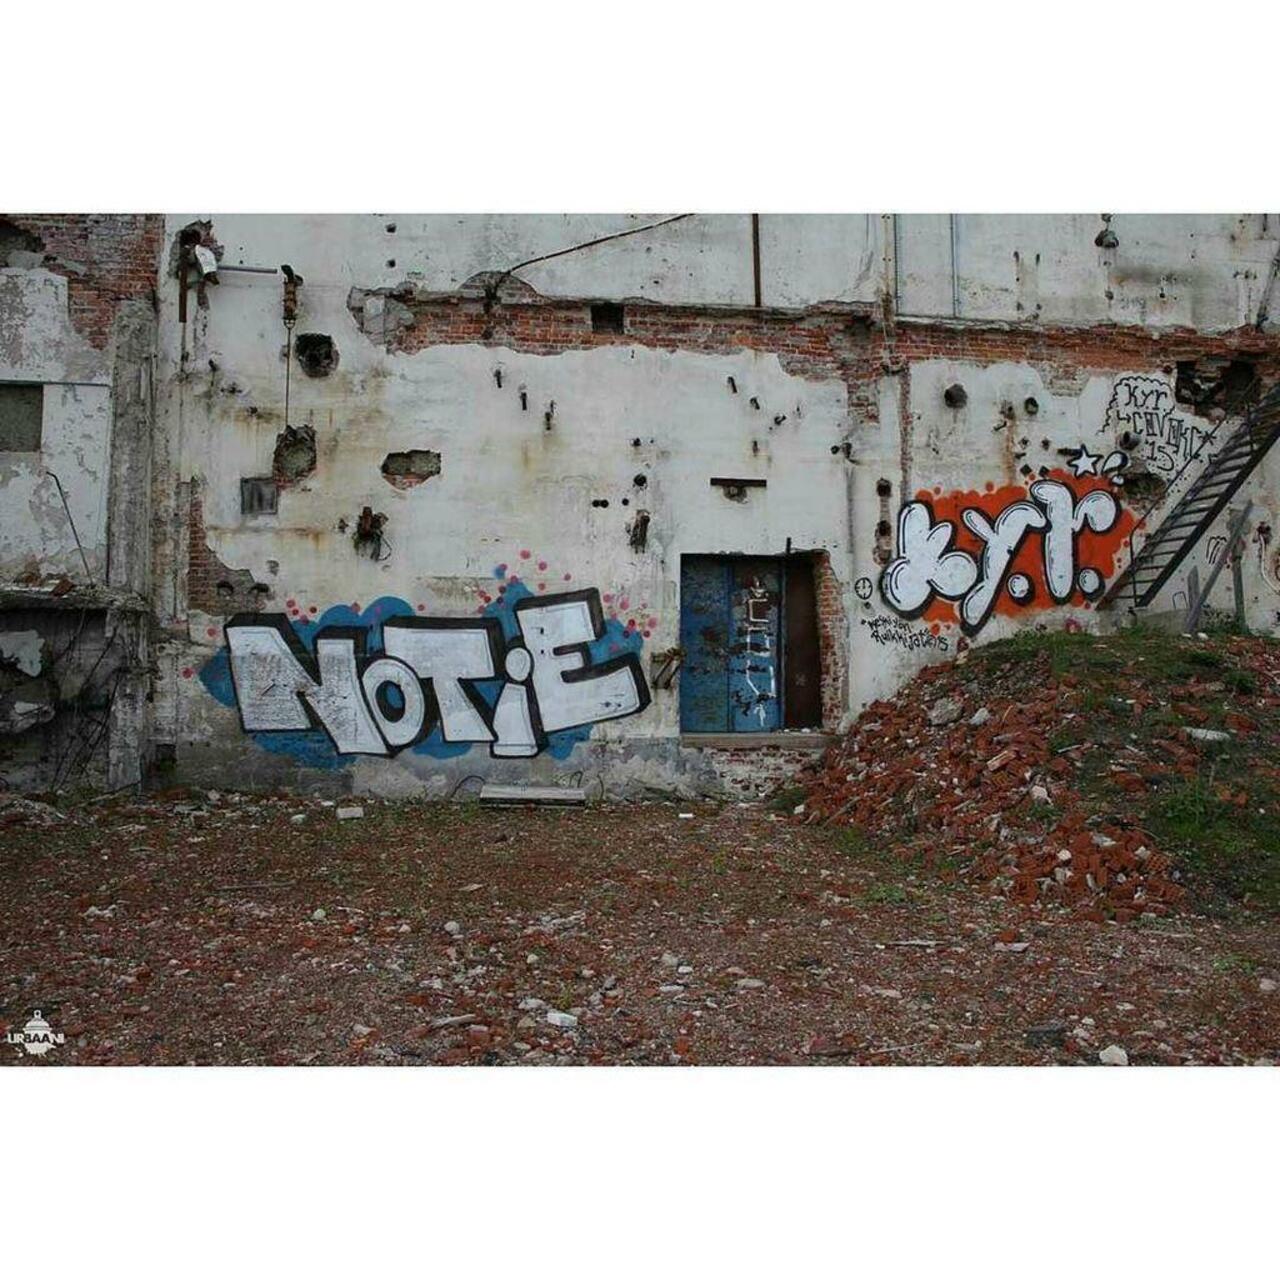 Notie, 2015 & KY.R. 2015.

#graffiti #graff #graffporn #graffitiporn #streetart #streetart… http://ift.tt/1KZCuZ0 http://t.co/tbtVrmaVss